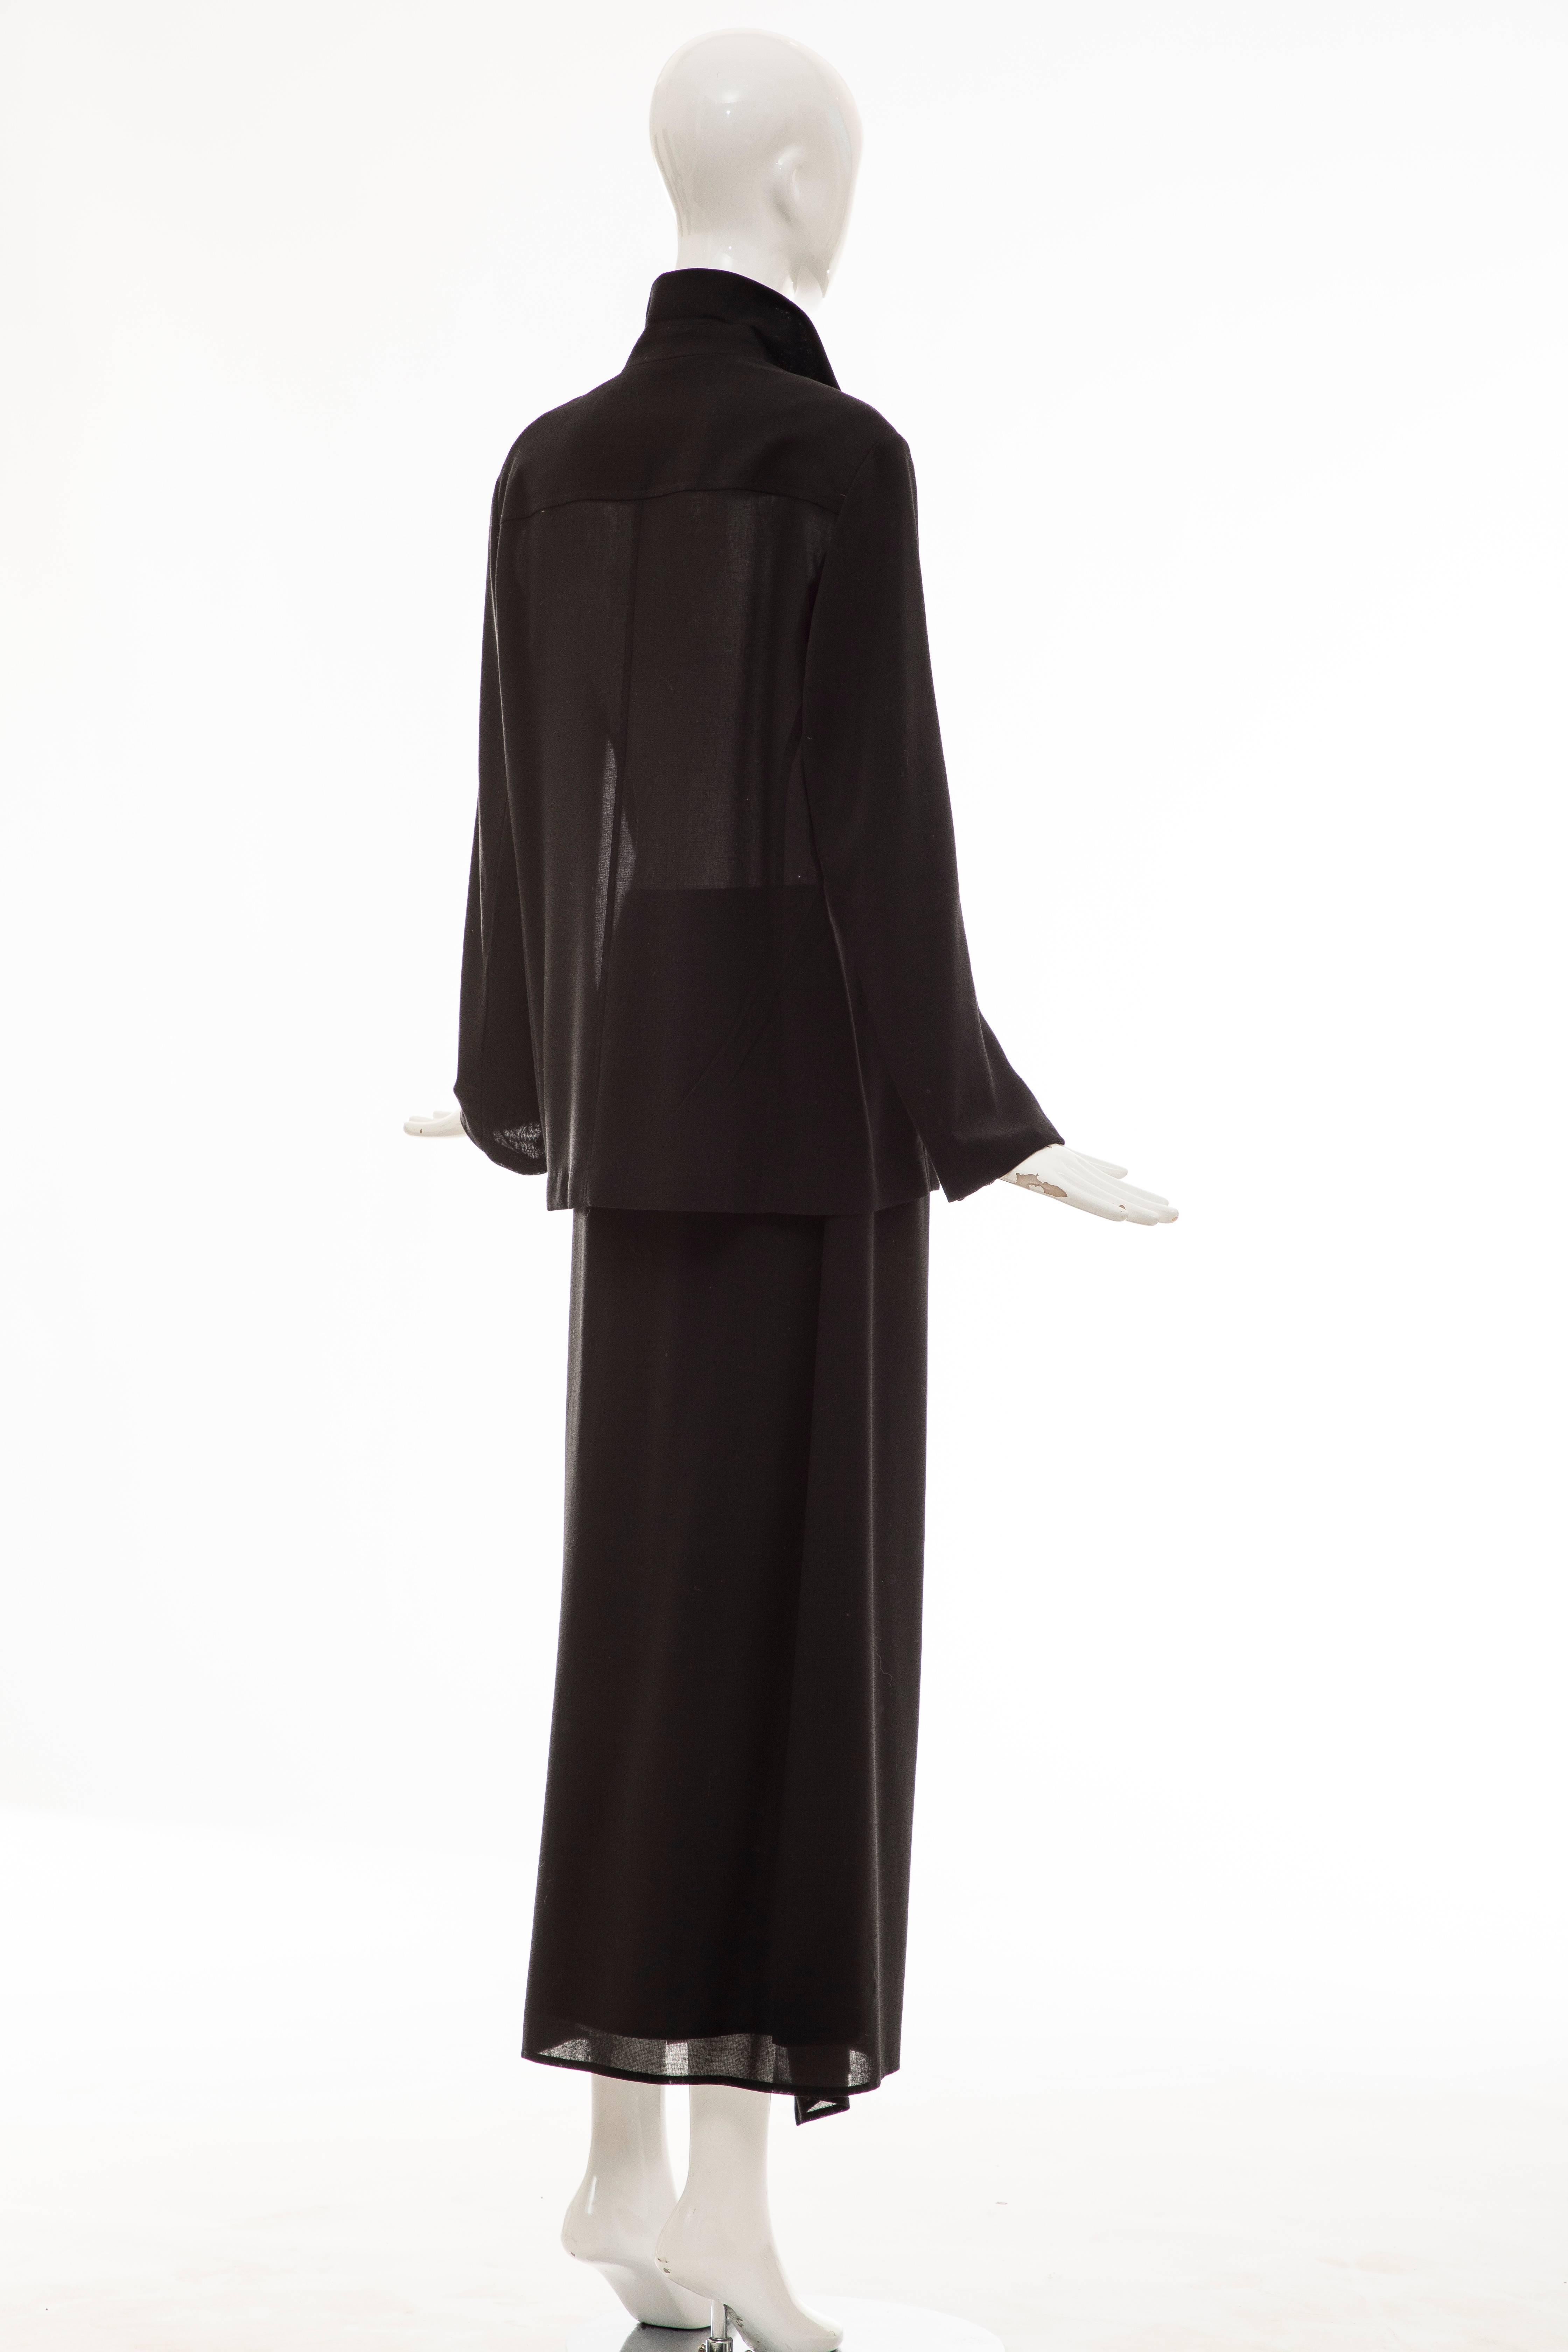 Cerruti 1881 Black Lightweight Wool Gauze Skirt-Suit, Circa 1990's For Sale 1